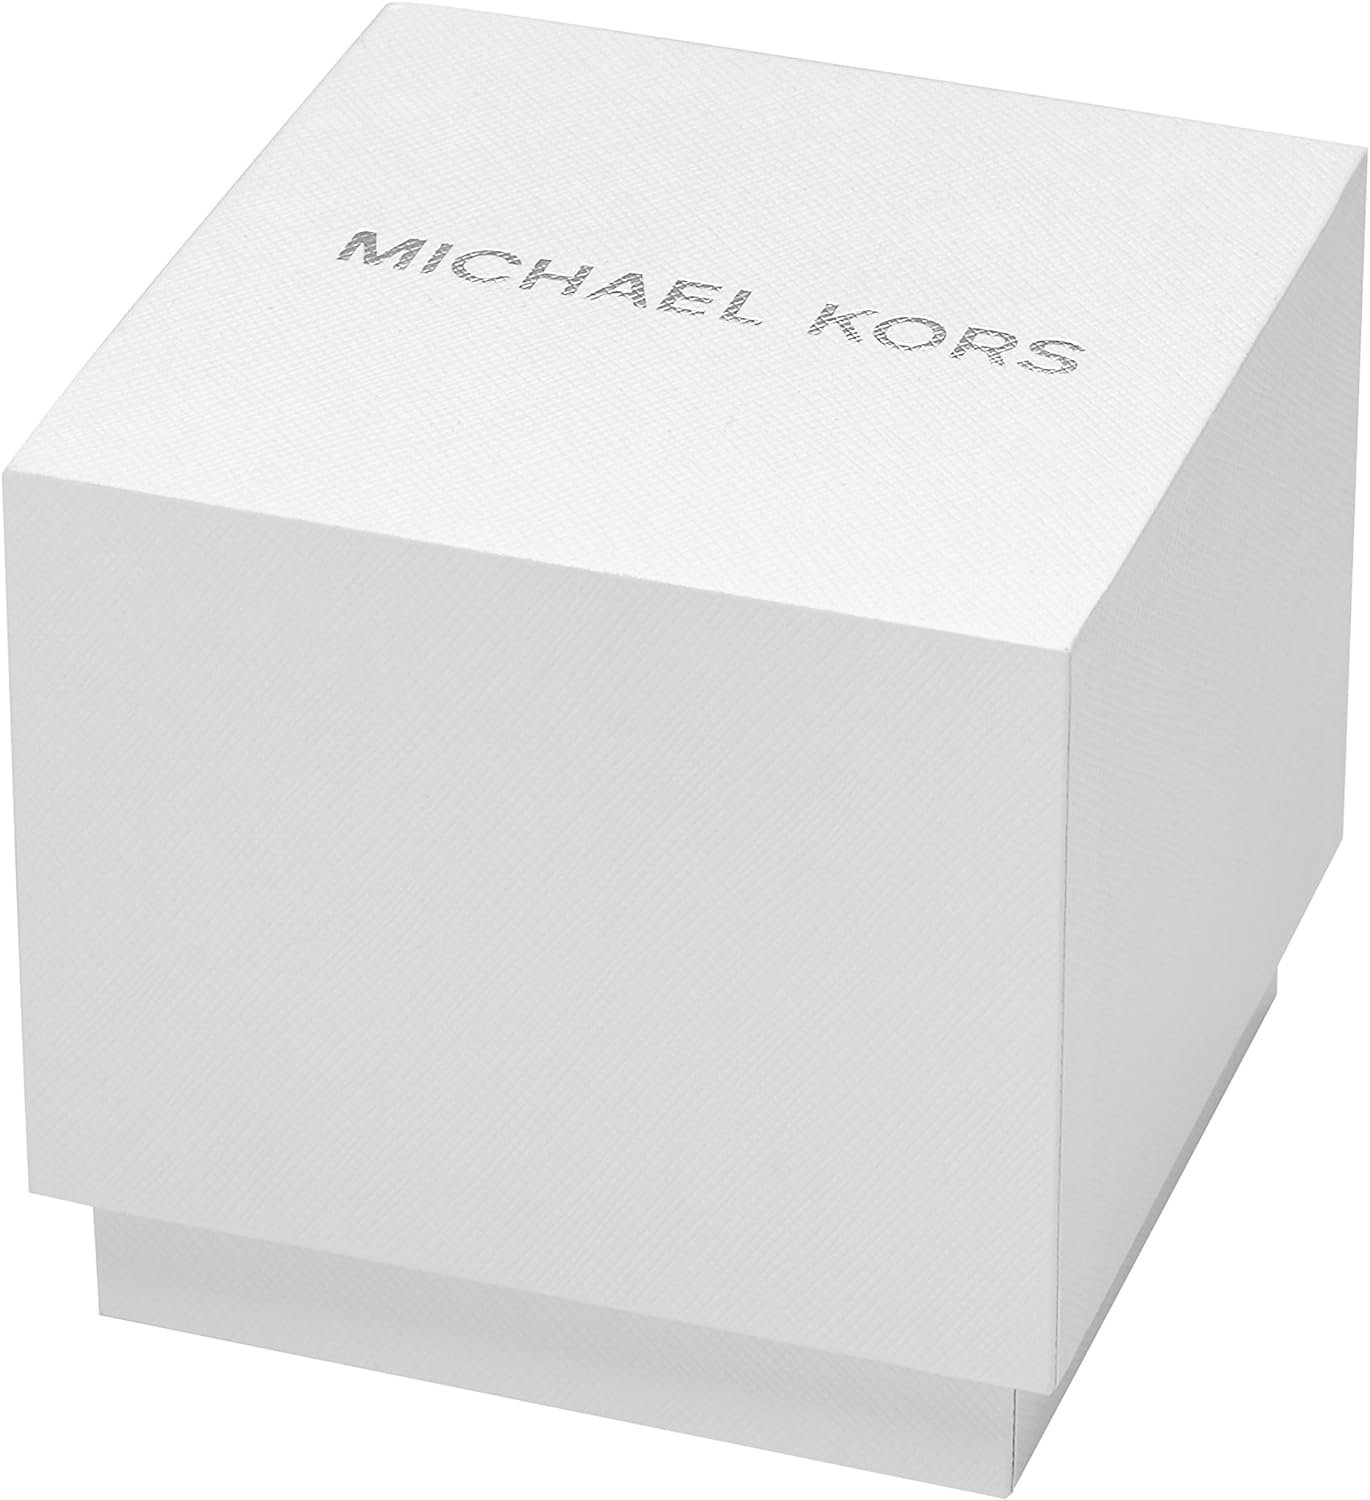 Michael Kors Lexington Mens Watch, Stainless Steel Bracelet Watch for Men